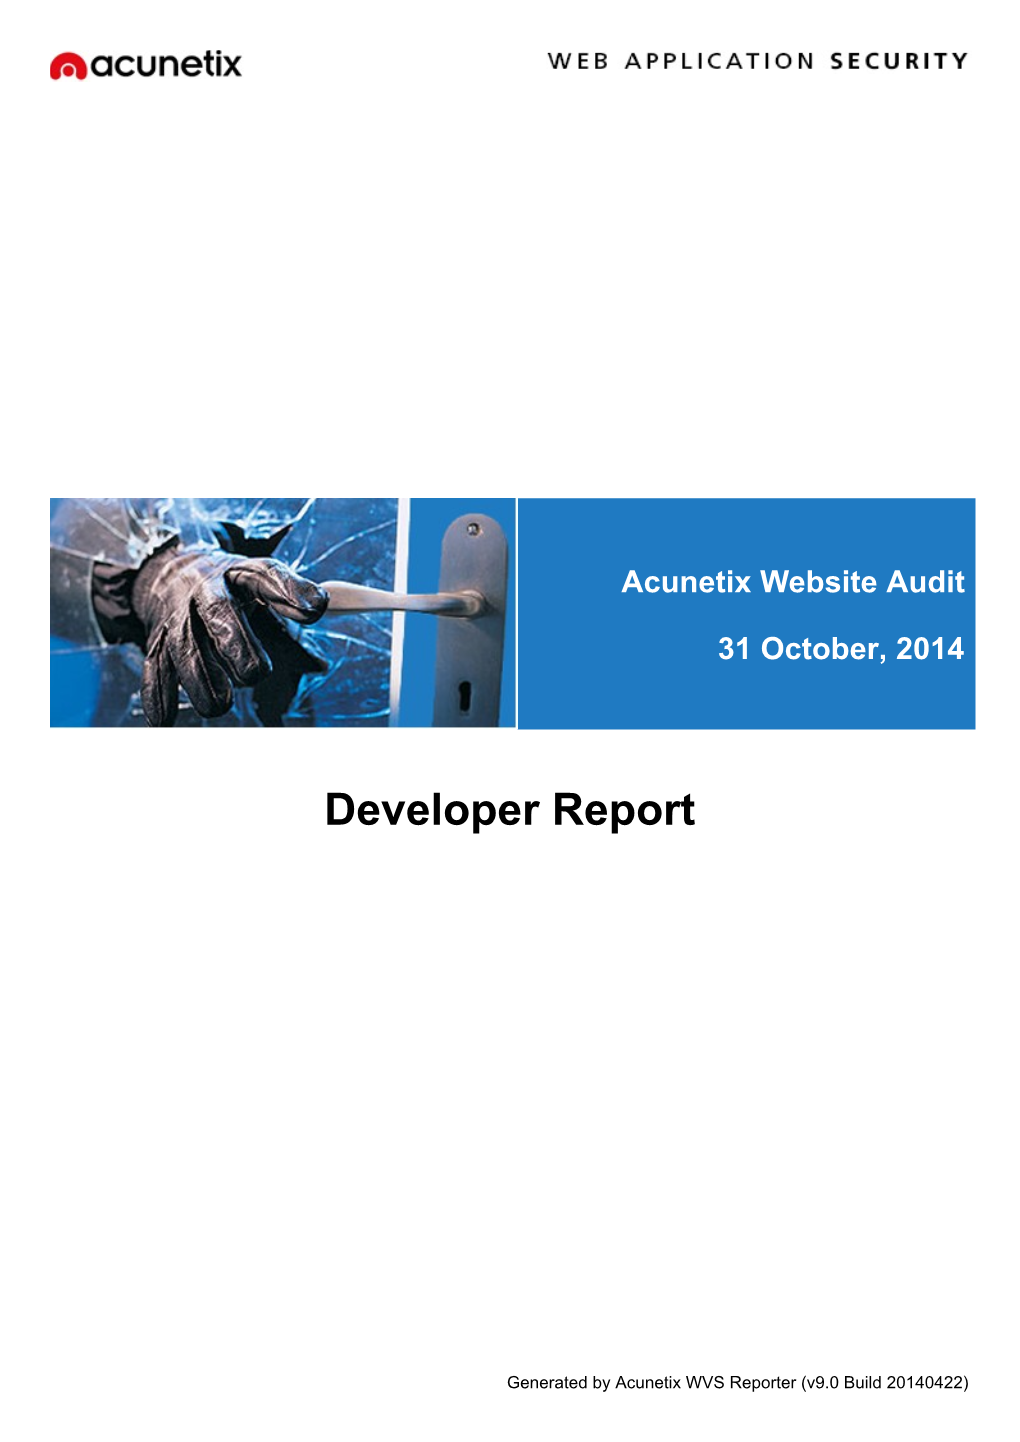 Developer Report Testphp Vulnweb Com.Pdf